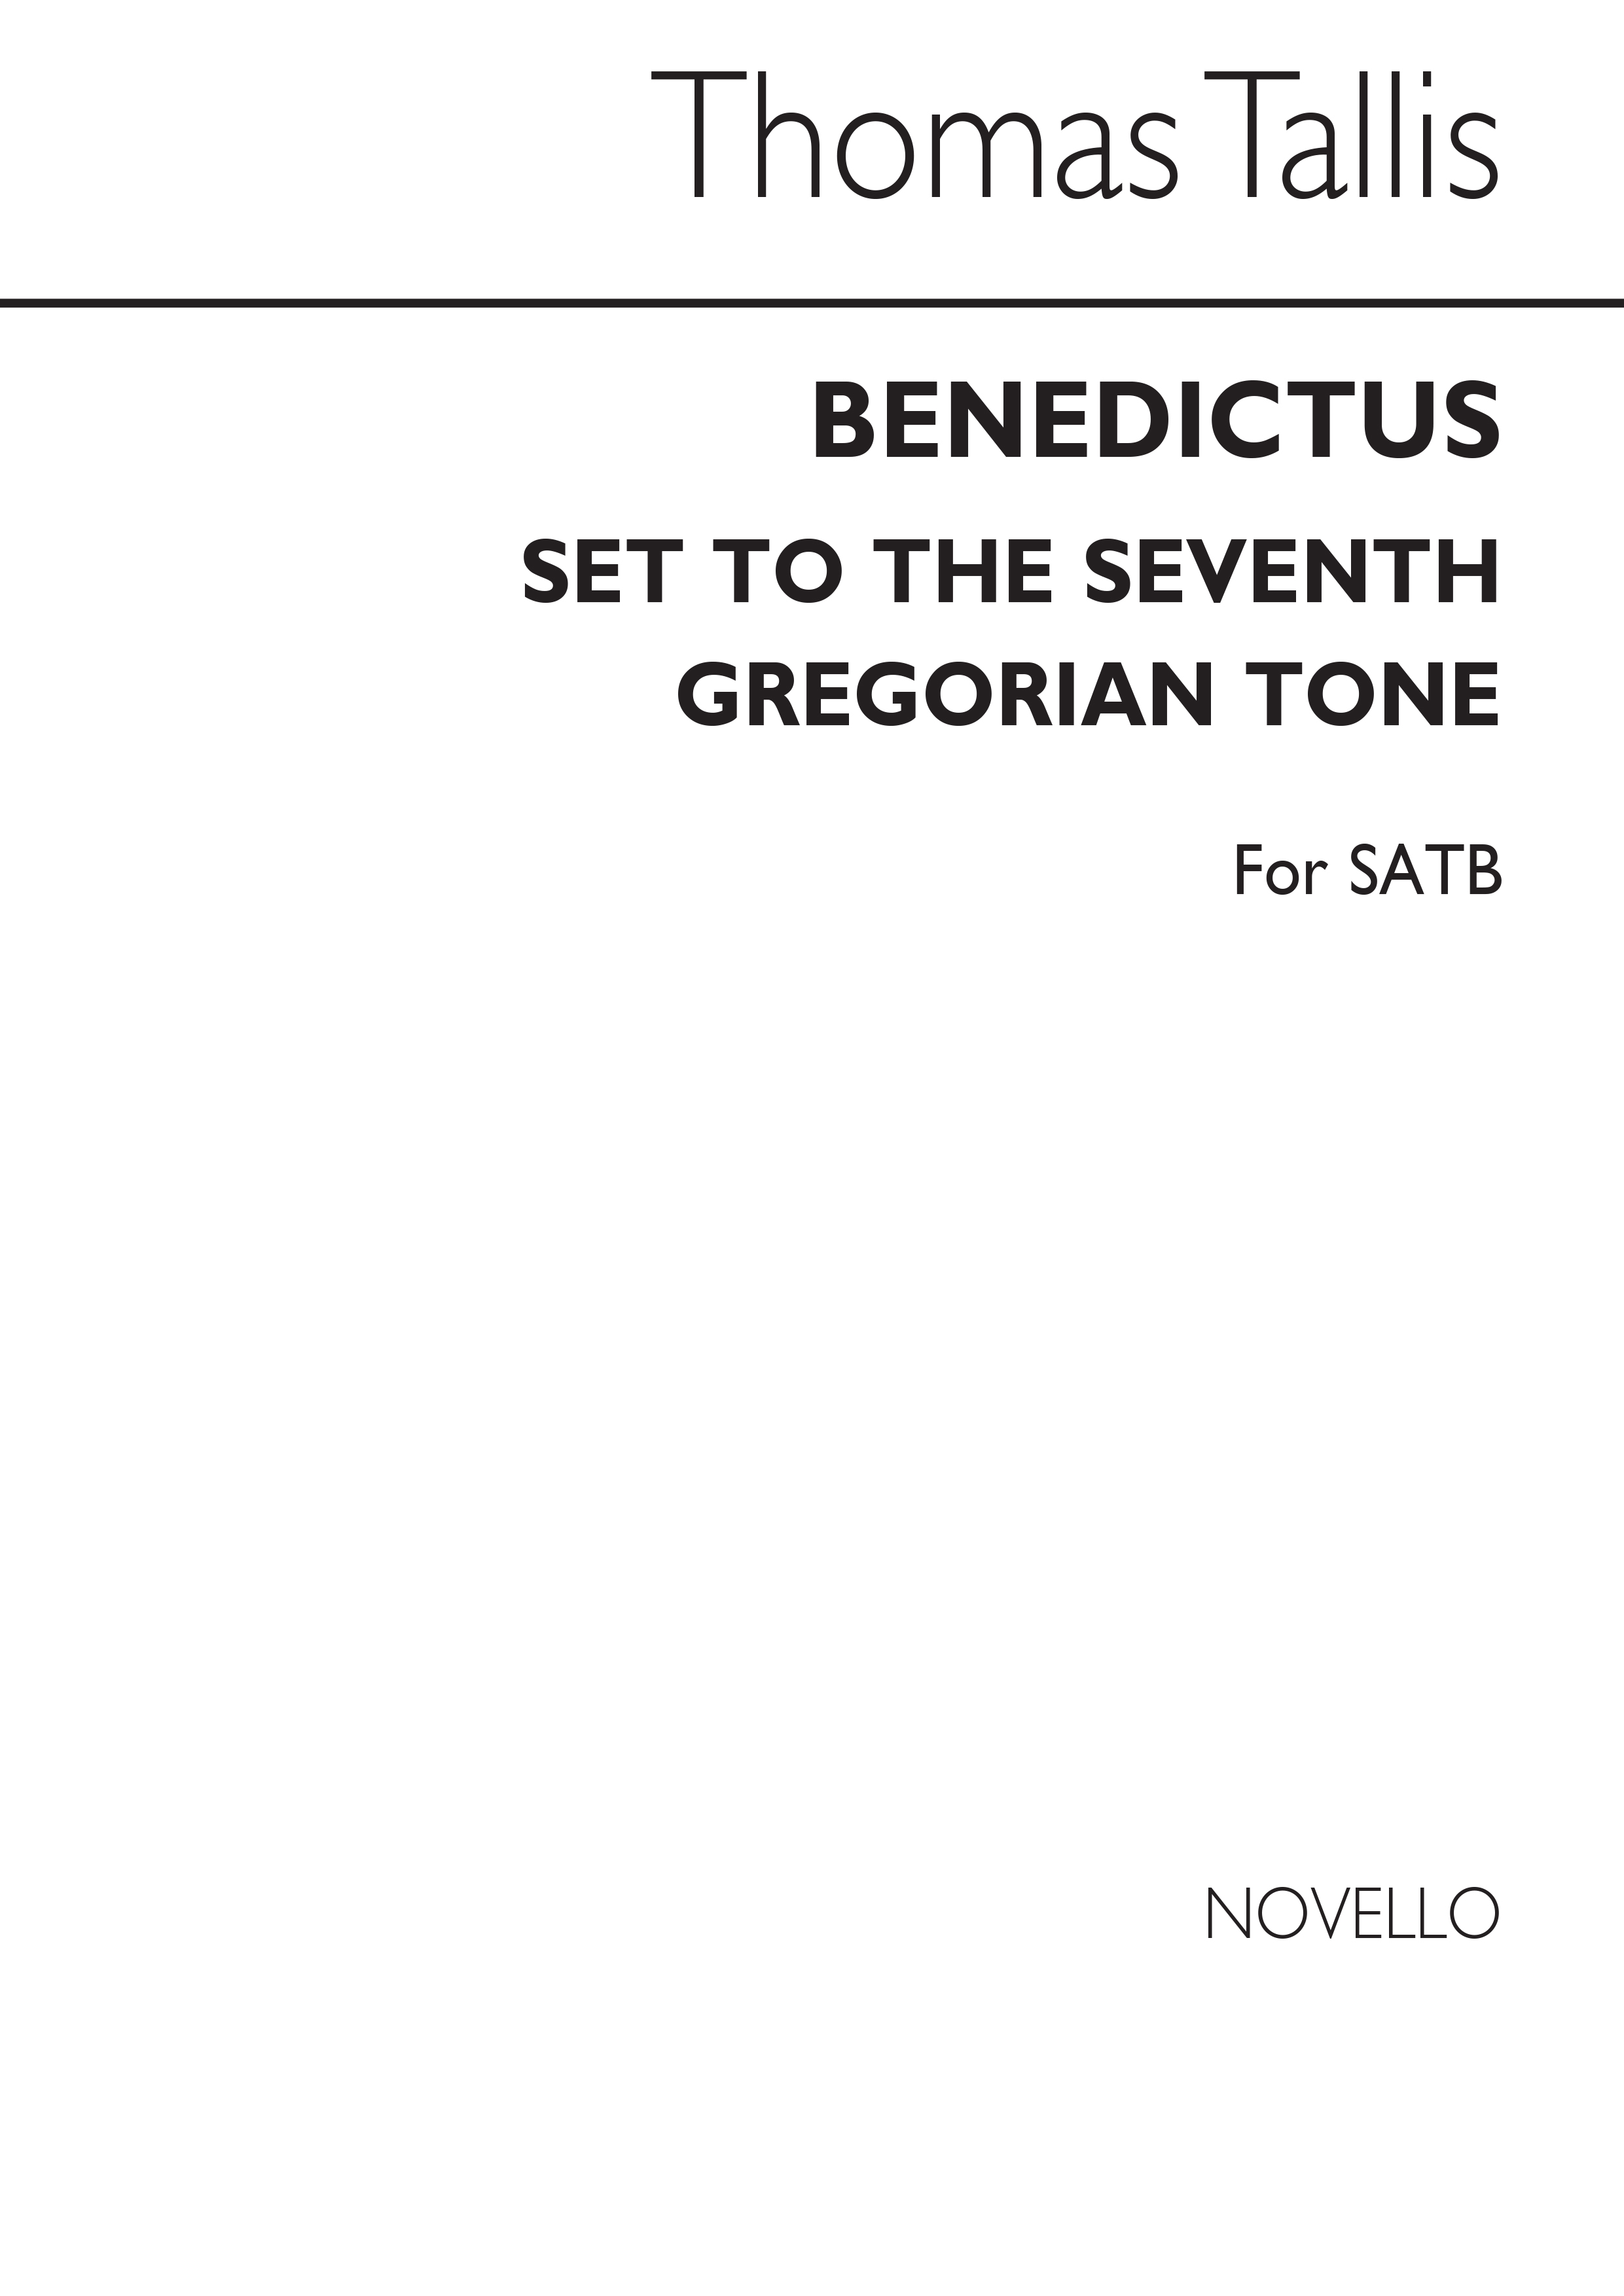 Tallis, T Benedictus In Faux-bourdon Satb (7th Gregorian Tone)